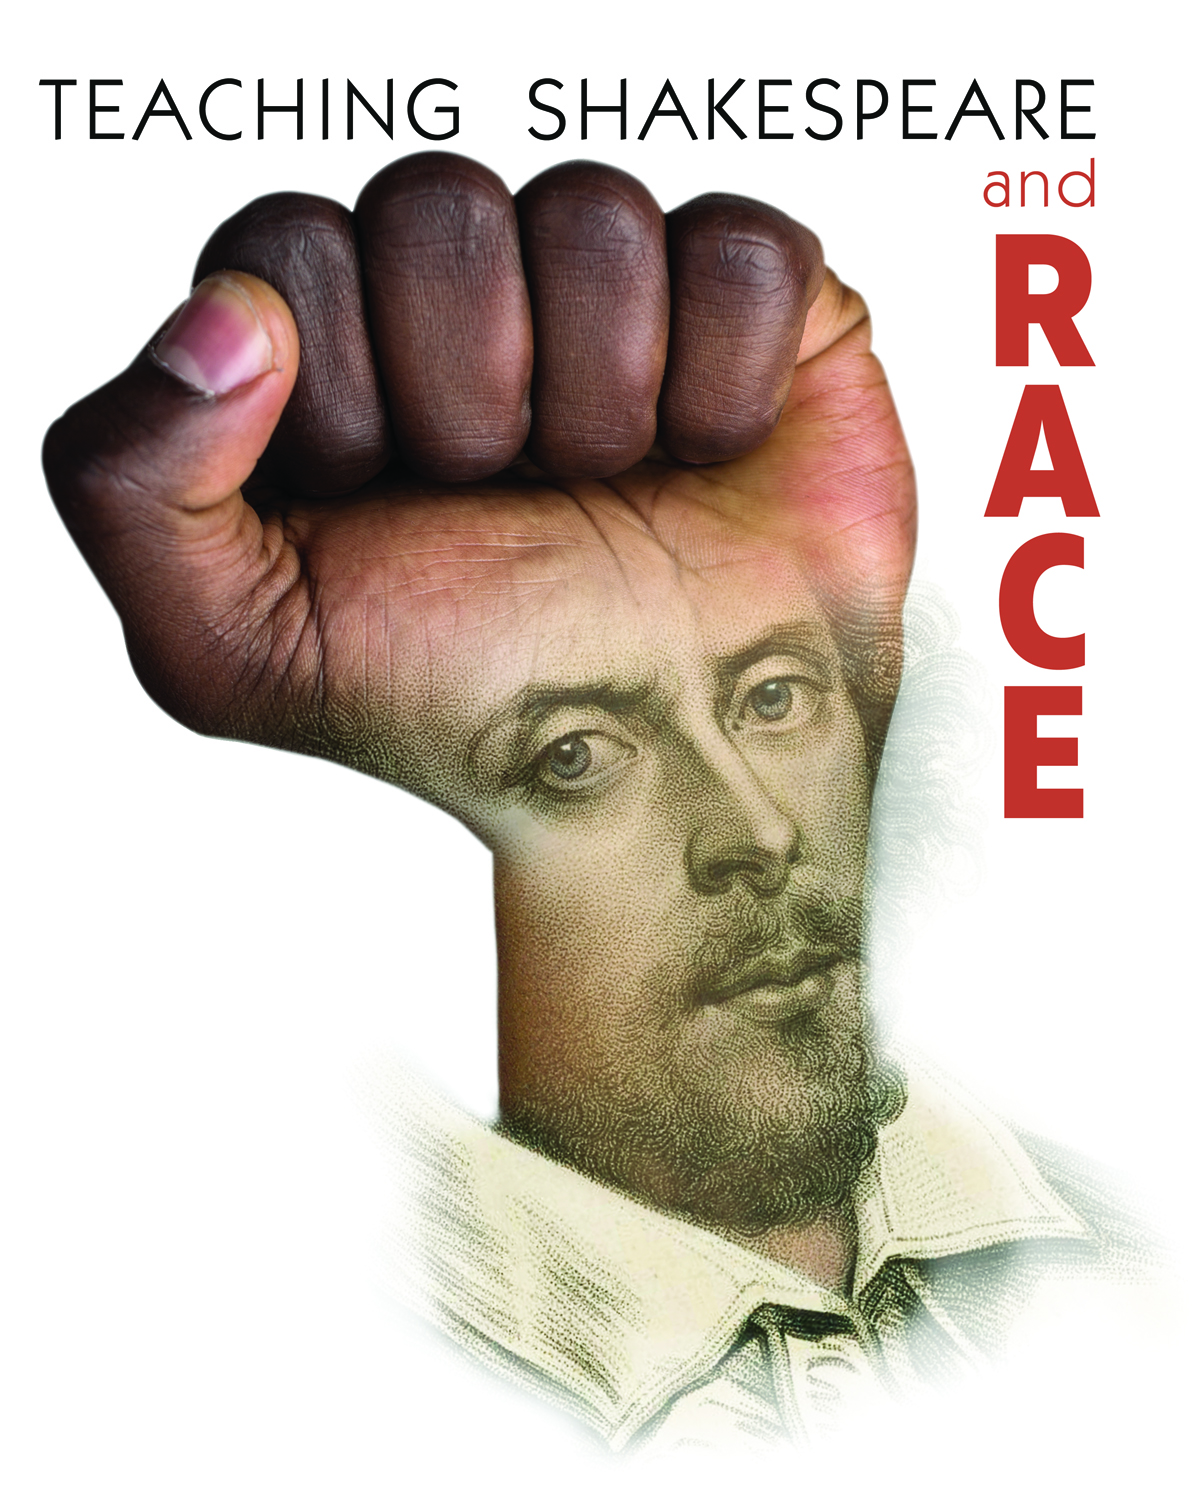 Teaching Shakespeare and Race